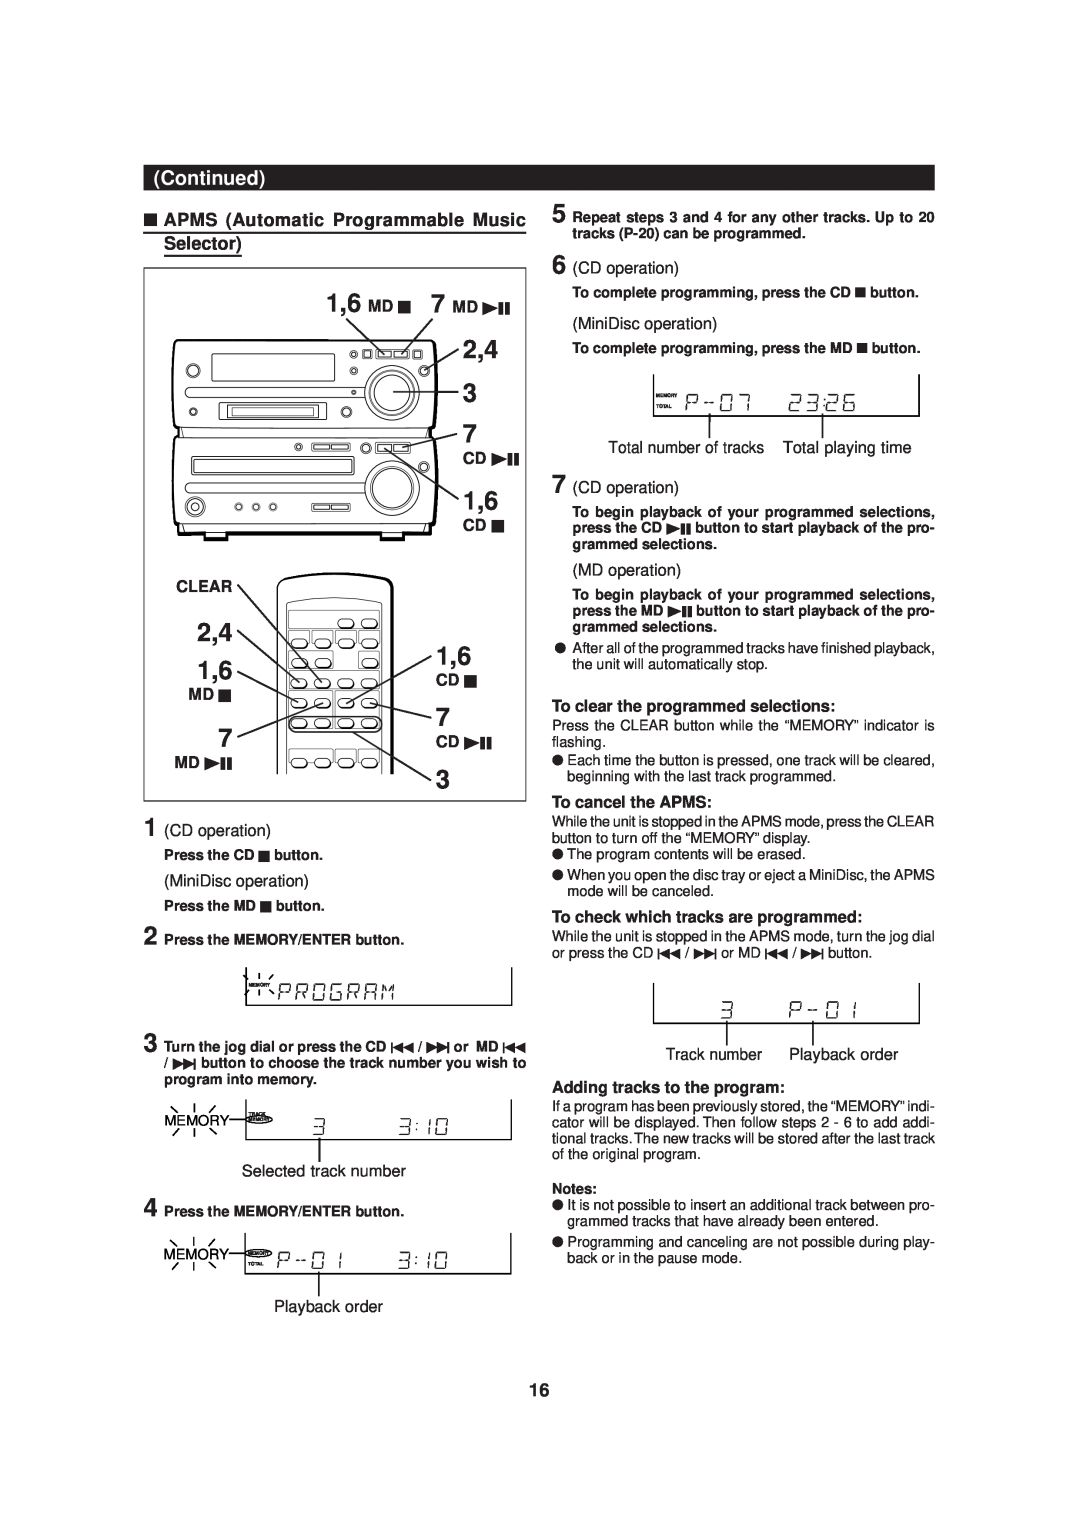 Sharp MD-MX20 operation manual 1,6 MD H 